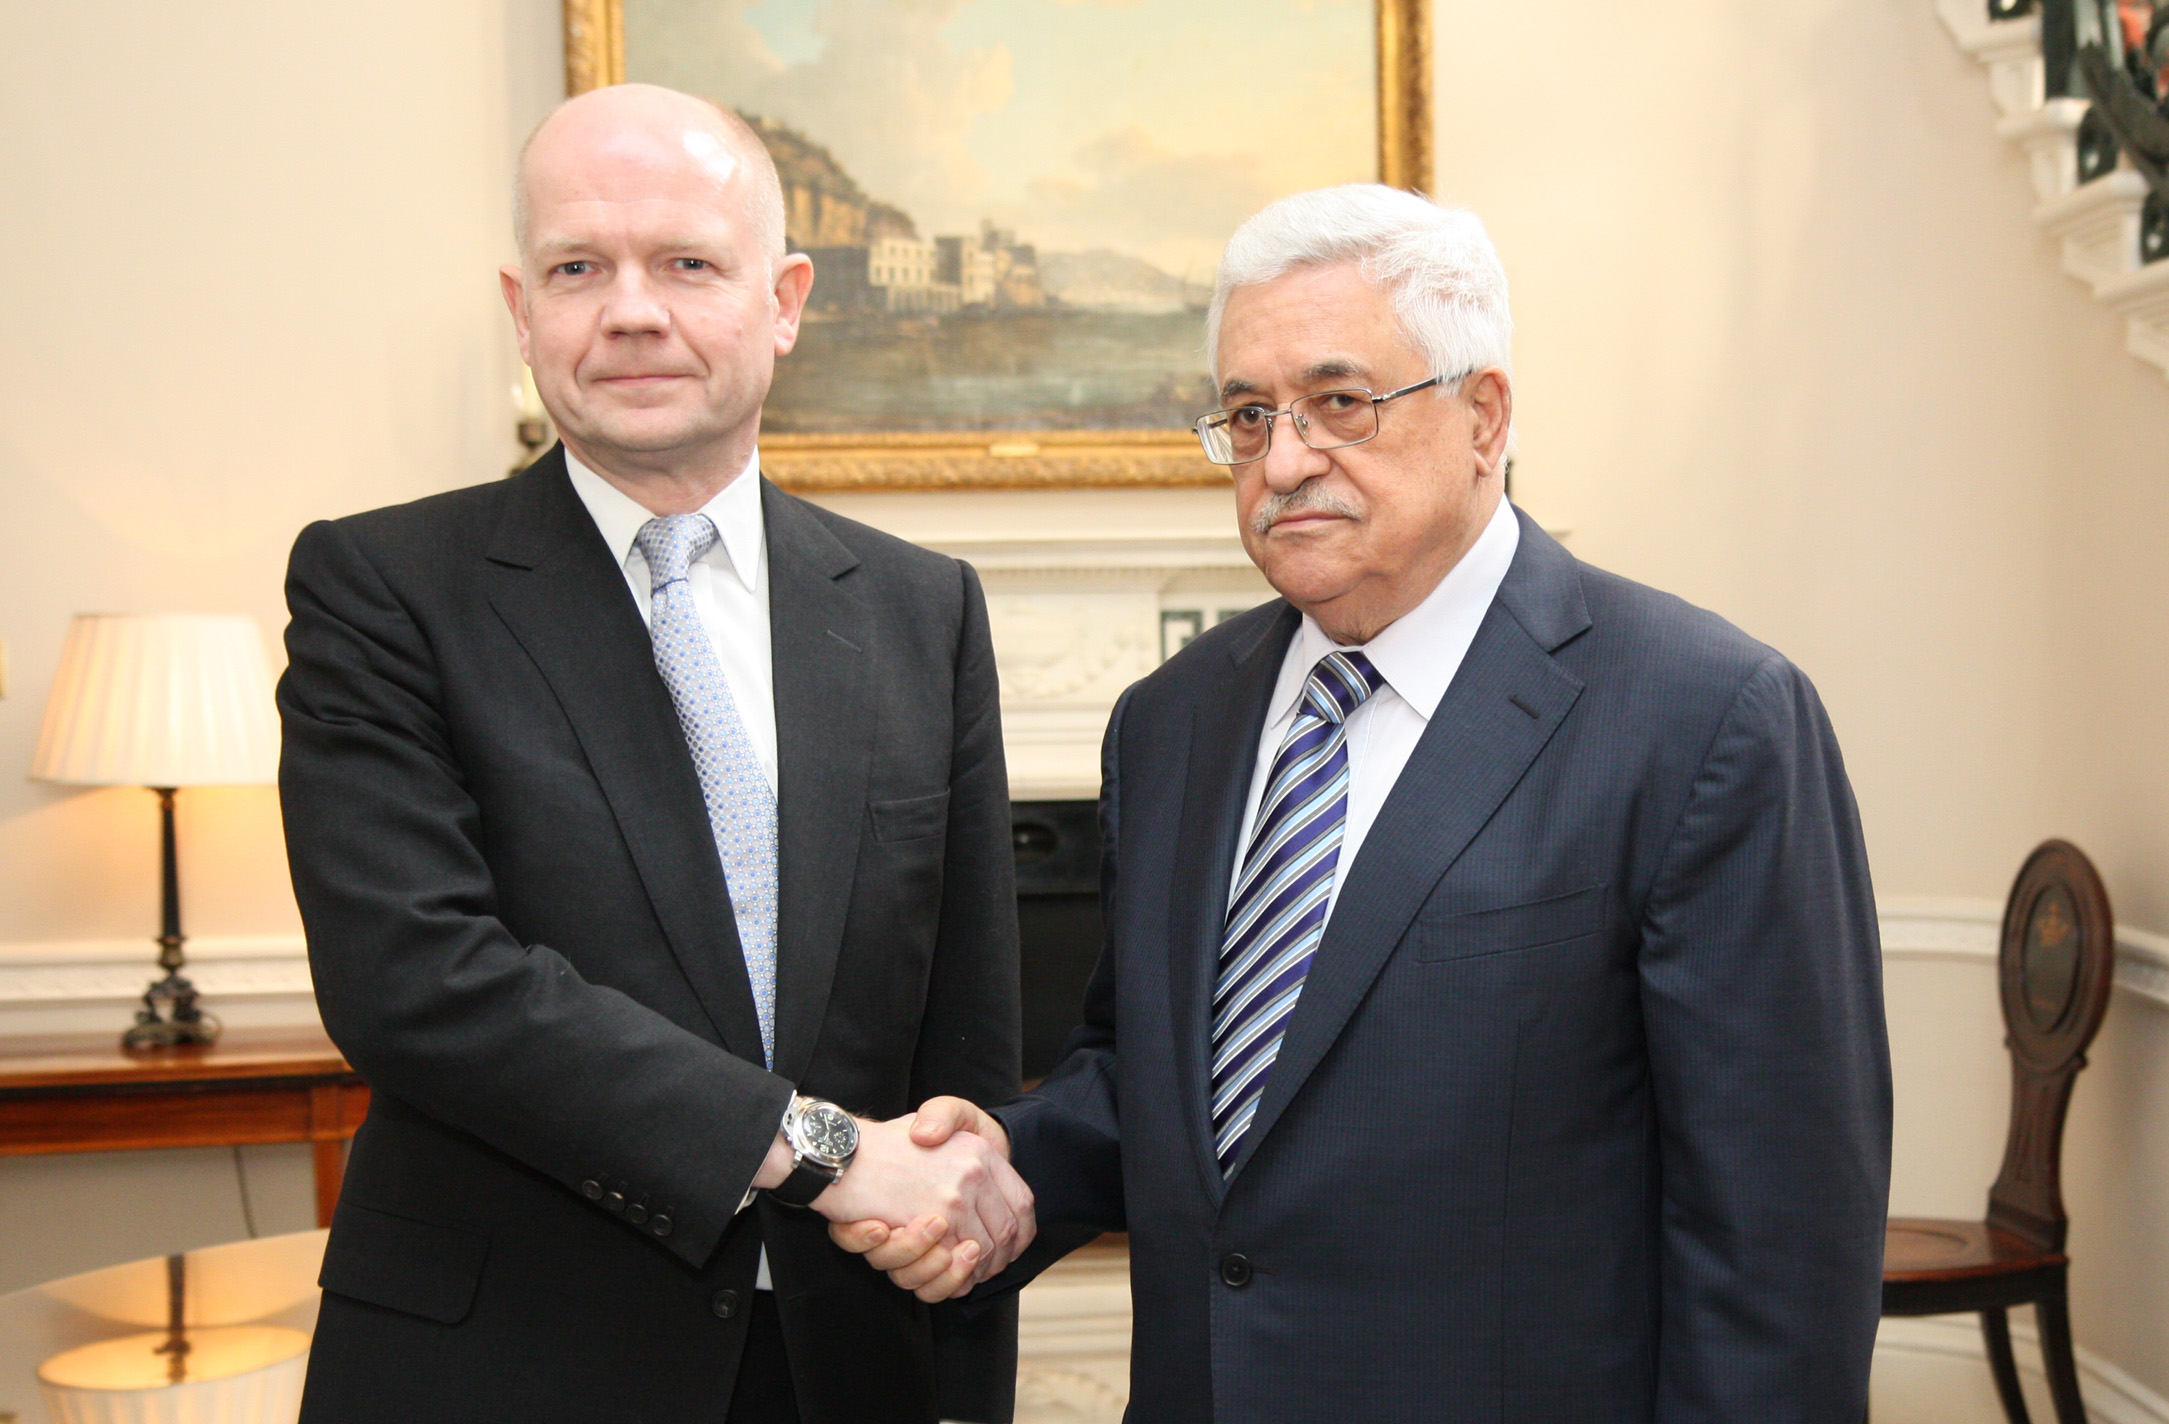 UK Foreign Secretary William Hague meeting Palestinian President Mahmoud Abbas in London, 16 January 2012. (6707700269)